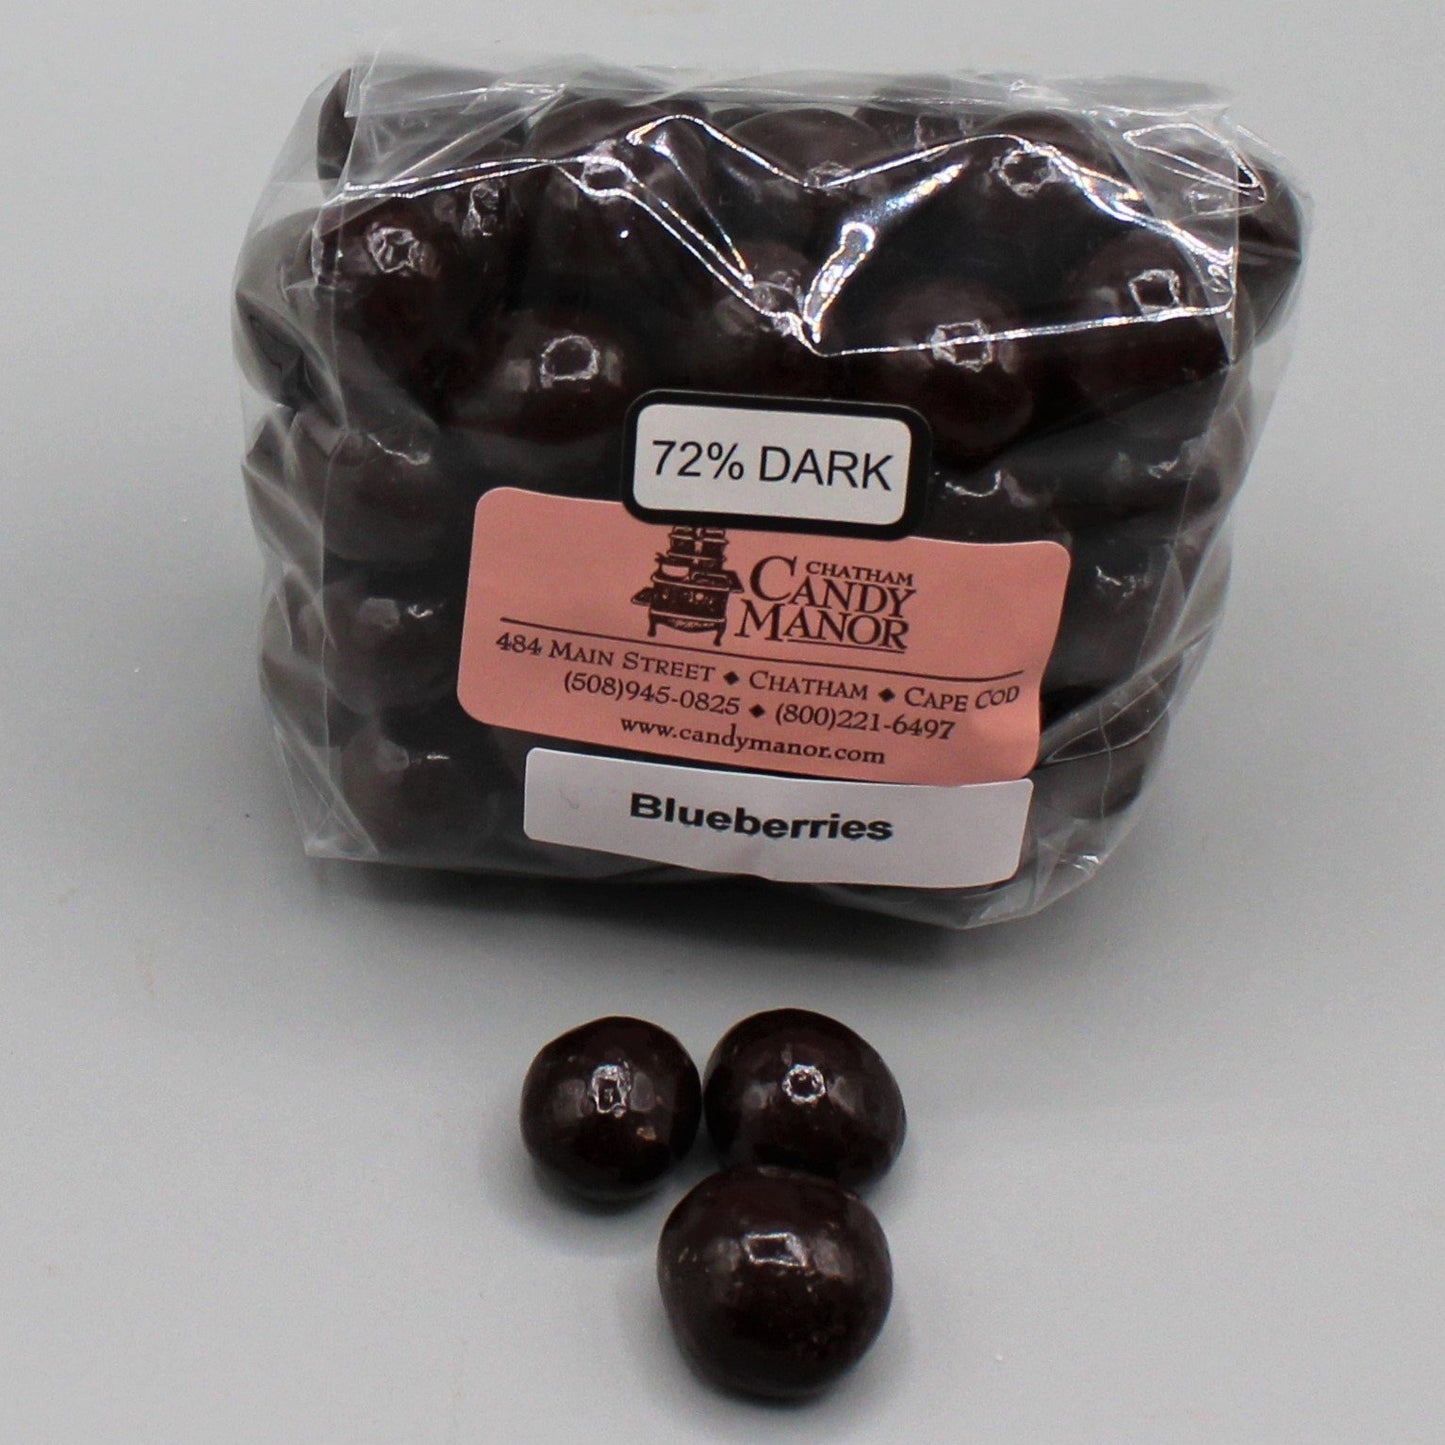 Blueberries - 72% Dark Chocolate Covered